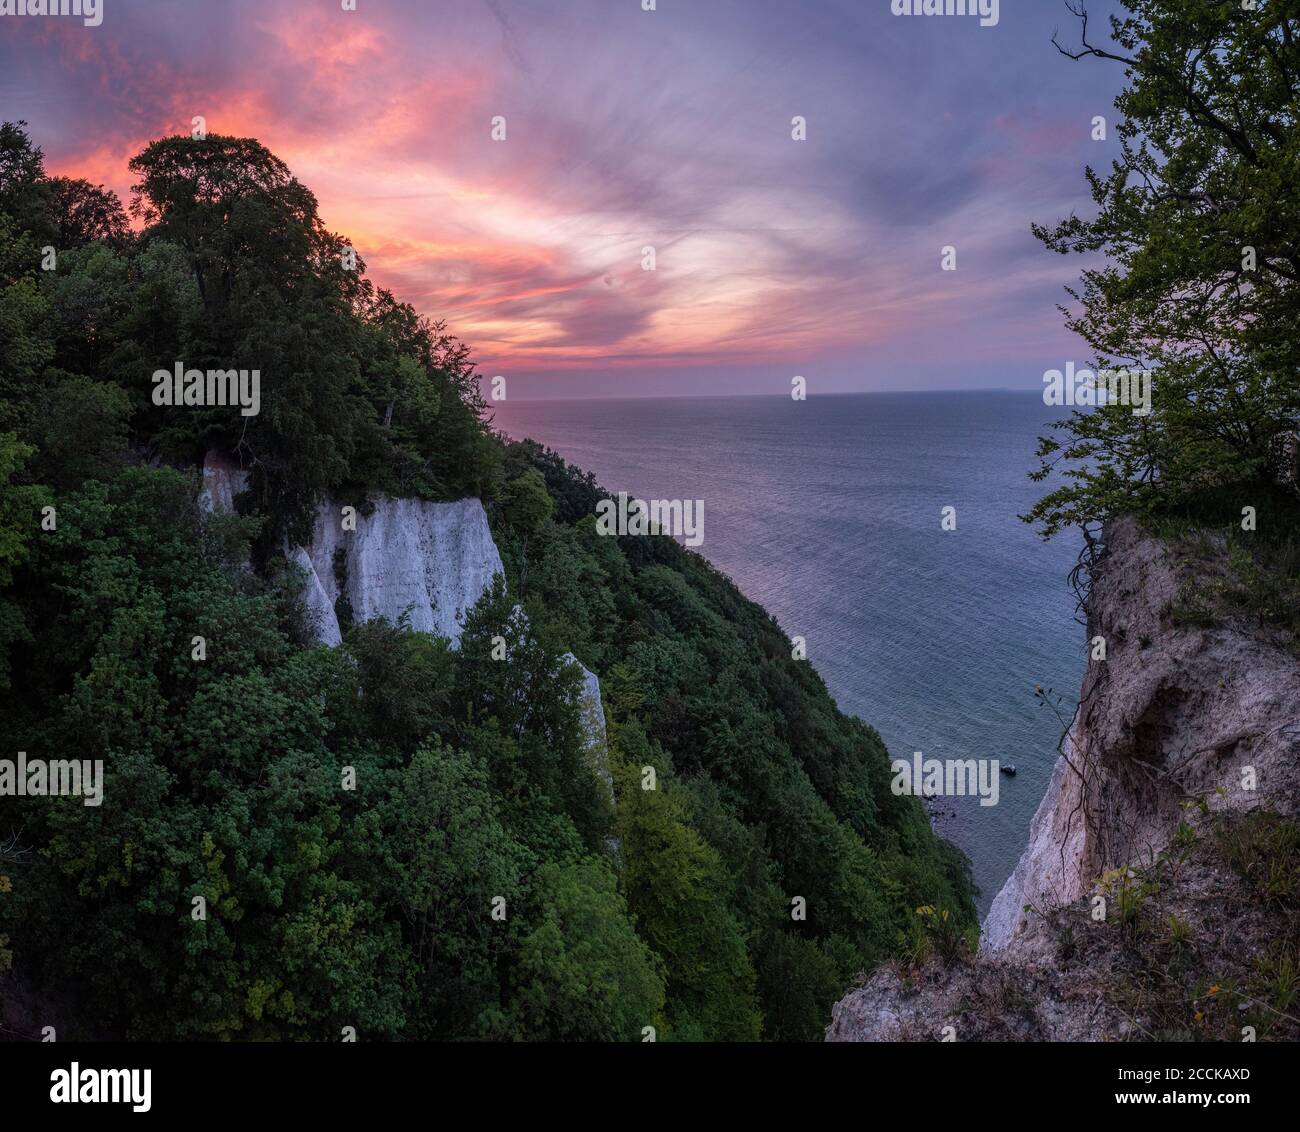 Germany, Mecklenburg-Western Pomerania, Stubbenkammer chalk cliffs at dusk Stock Photo